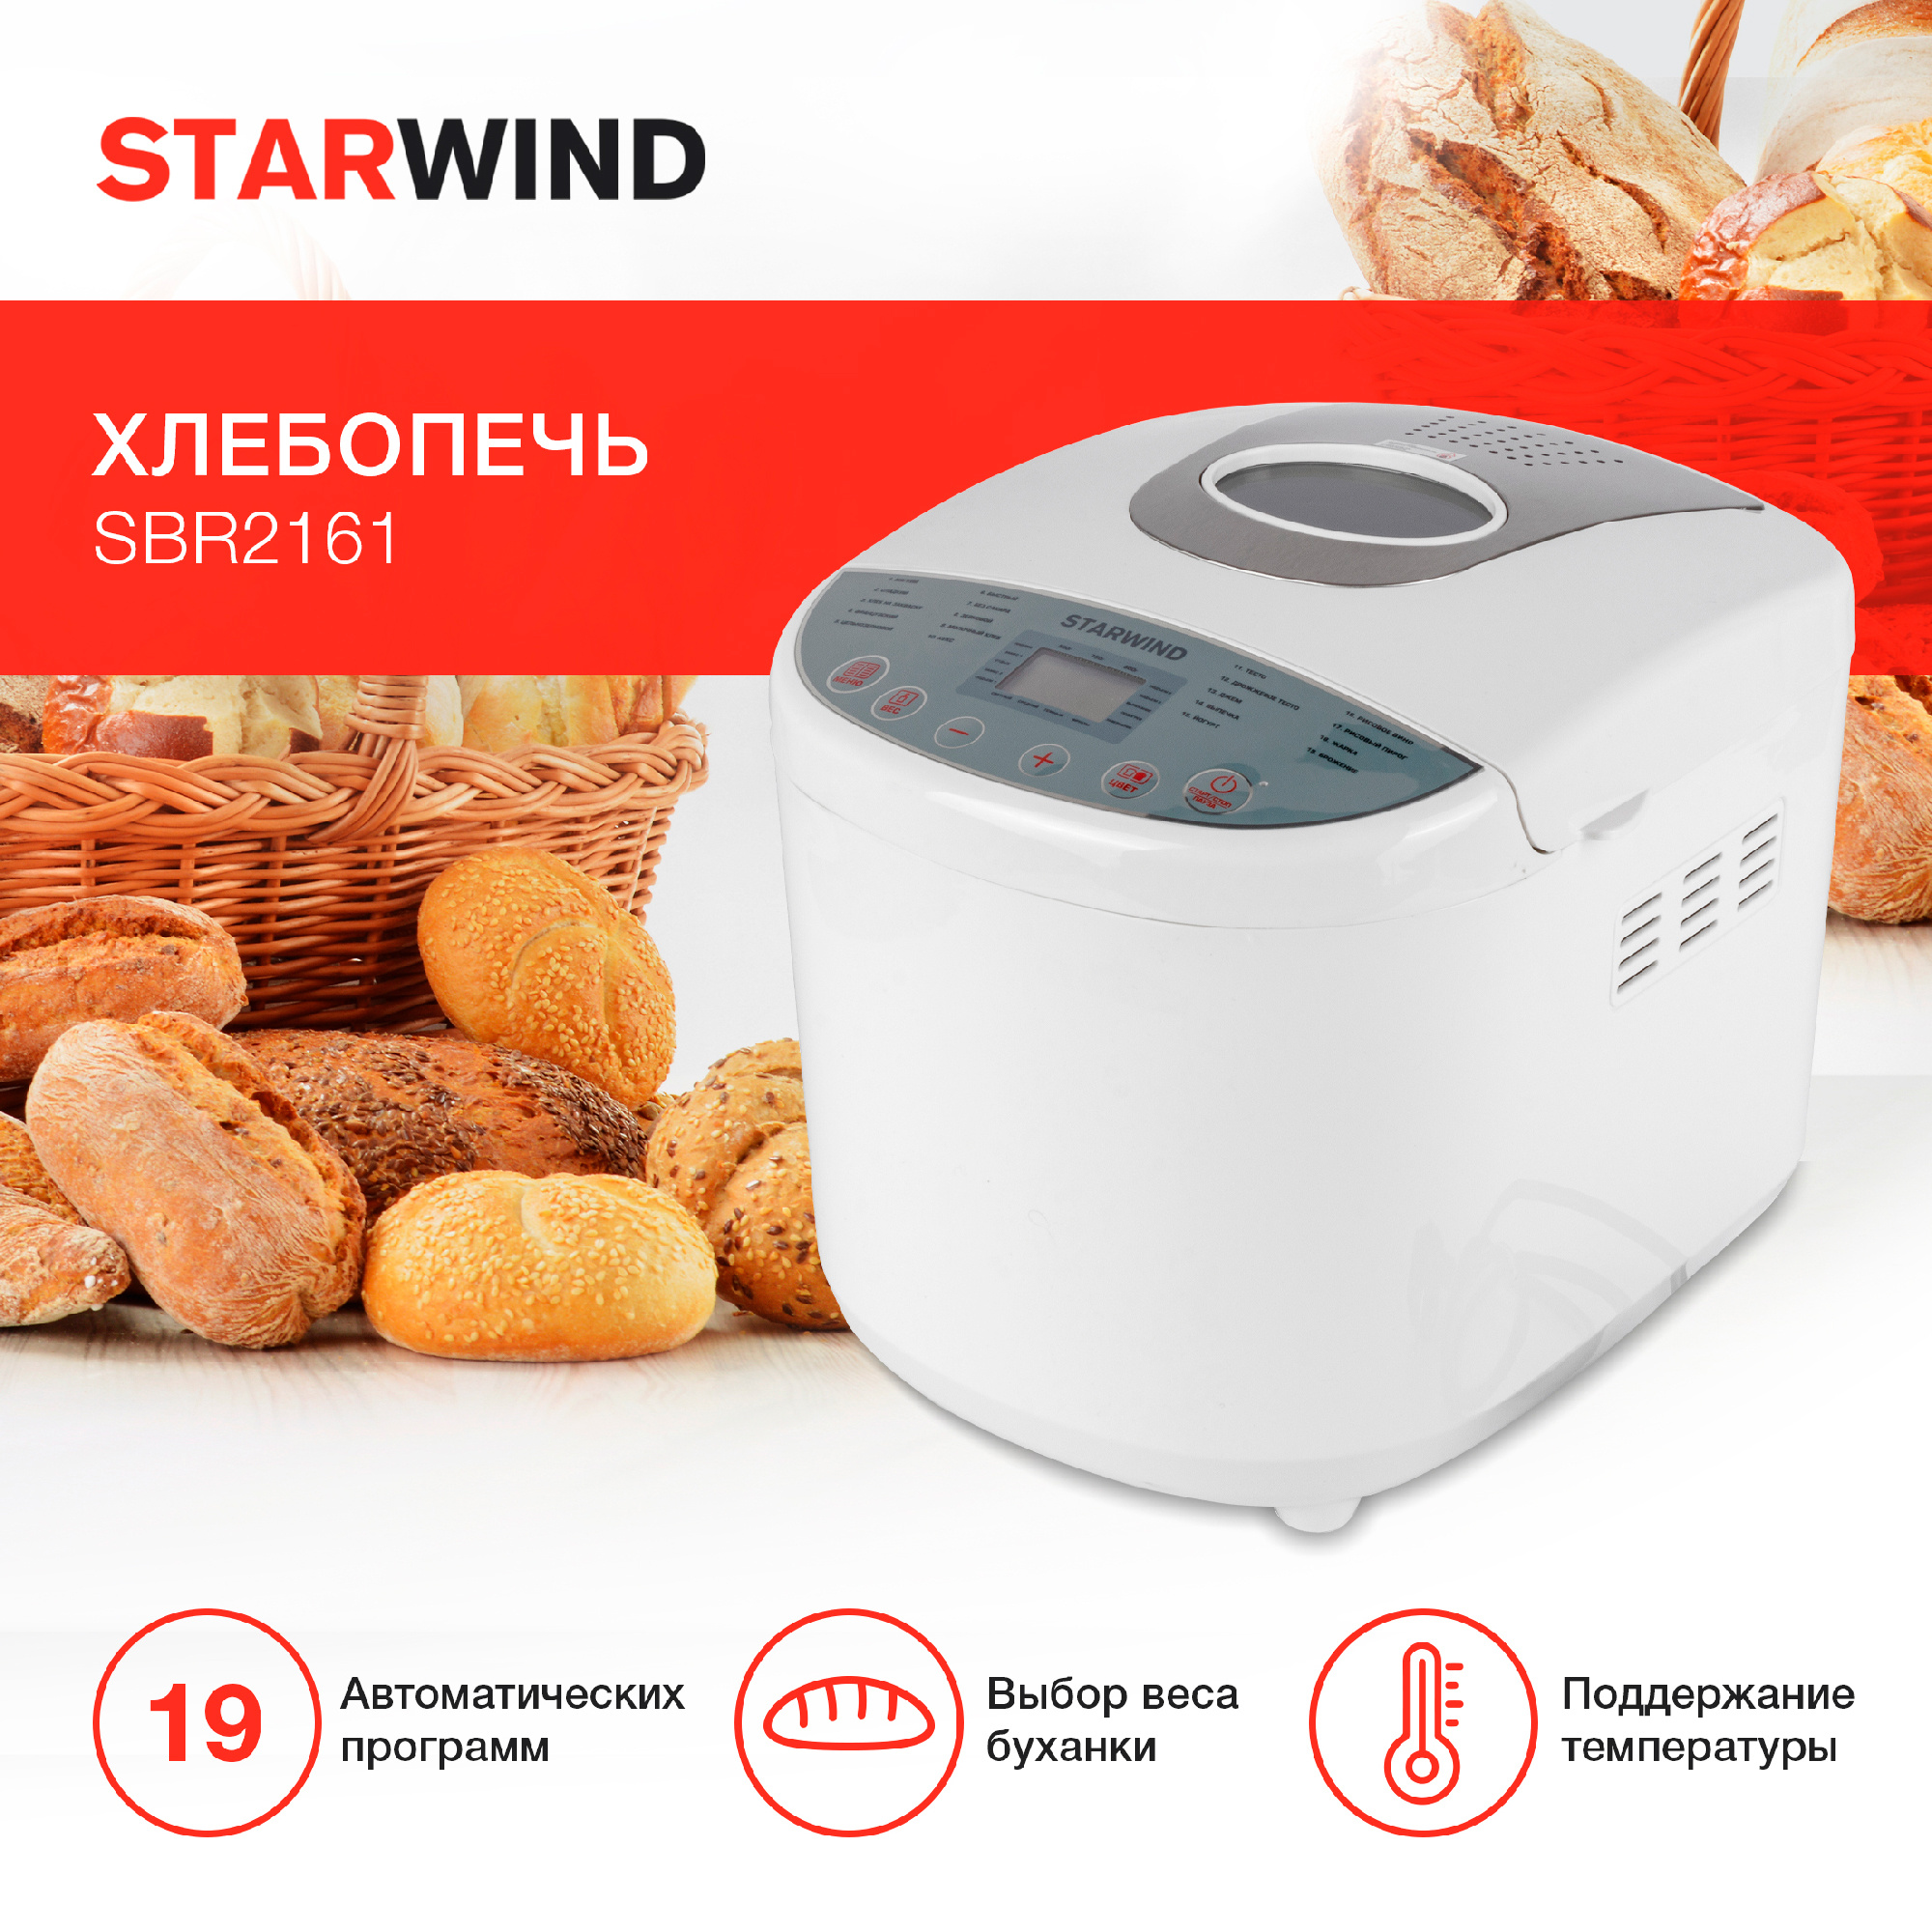 Хлебопечь Starwind SBR2161 белый/серый от магазина Старвинд